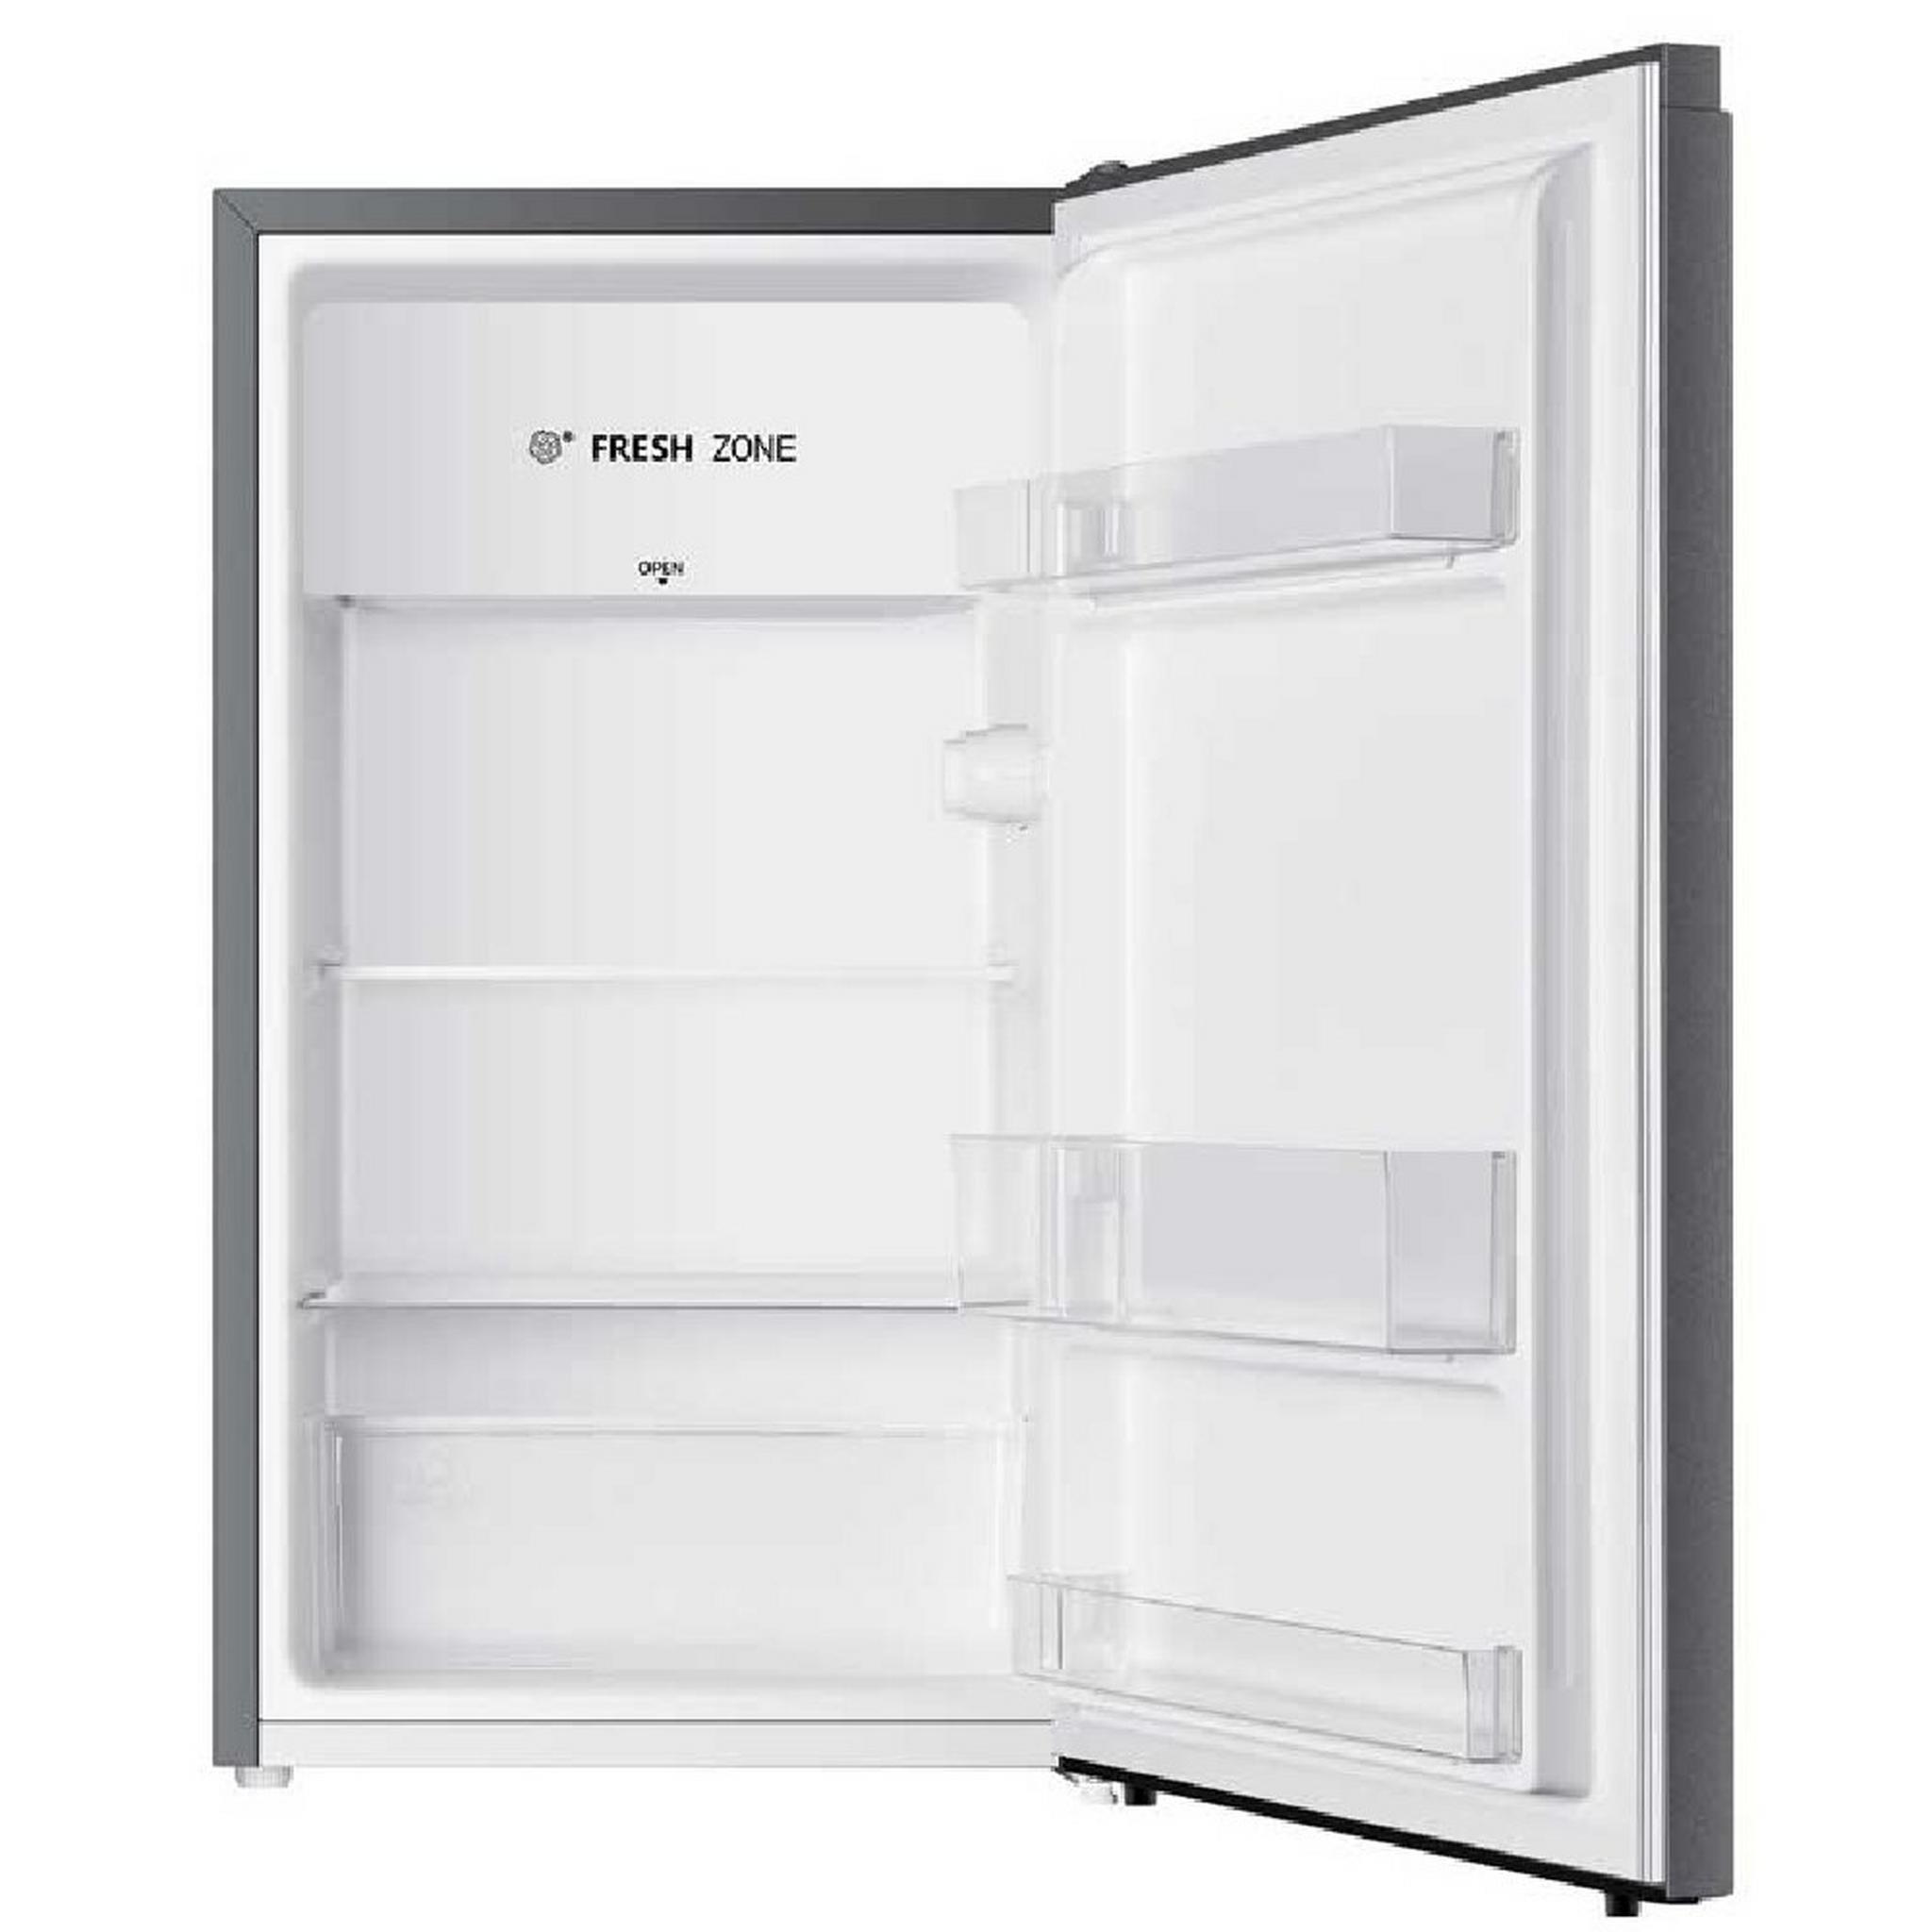 Hisense Single Door Mini Refrigerator, 4.3 CFT, 122 Liters, RR122D4ASU – Silver